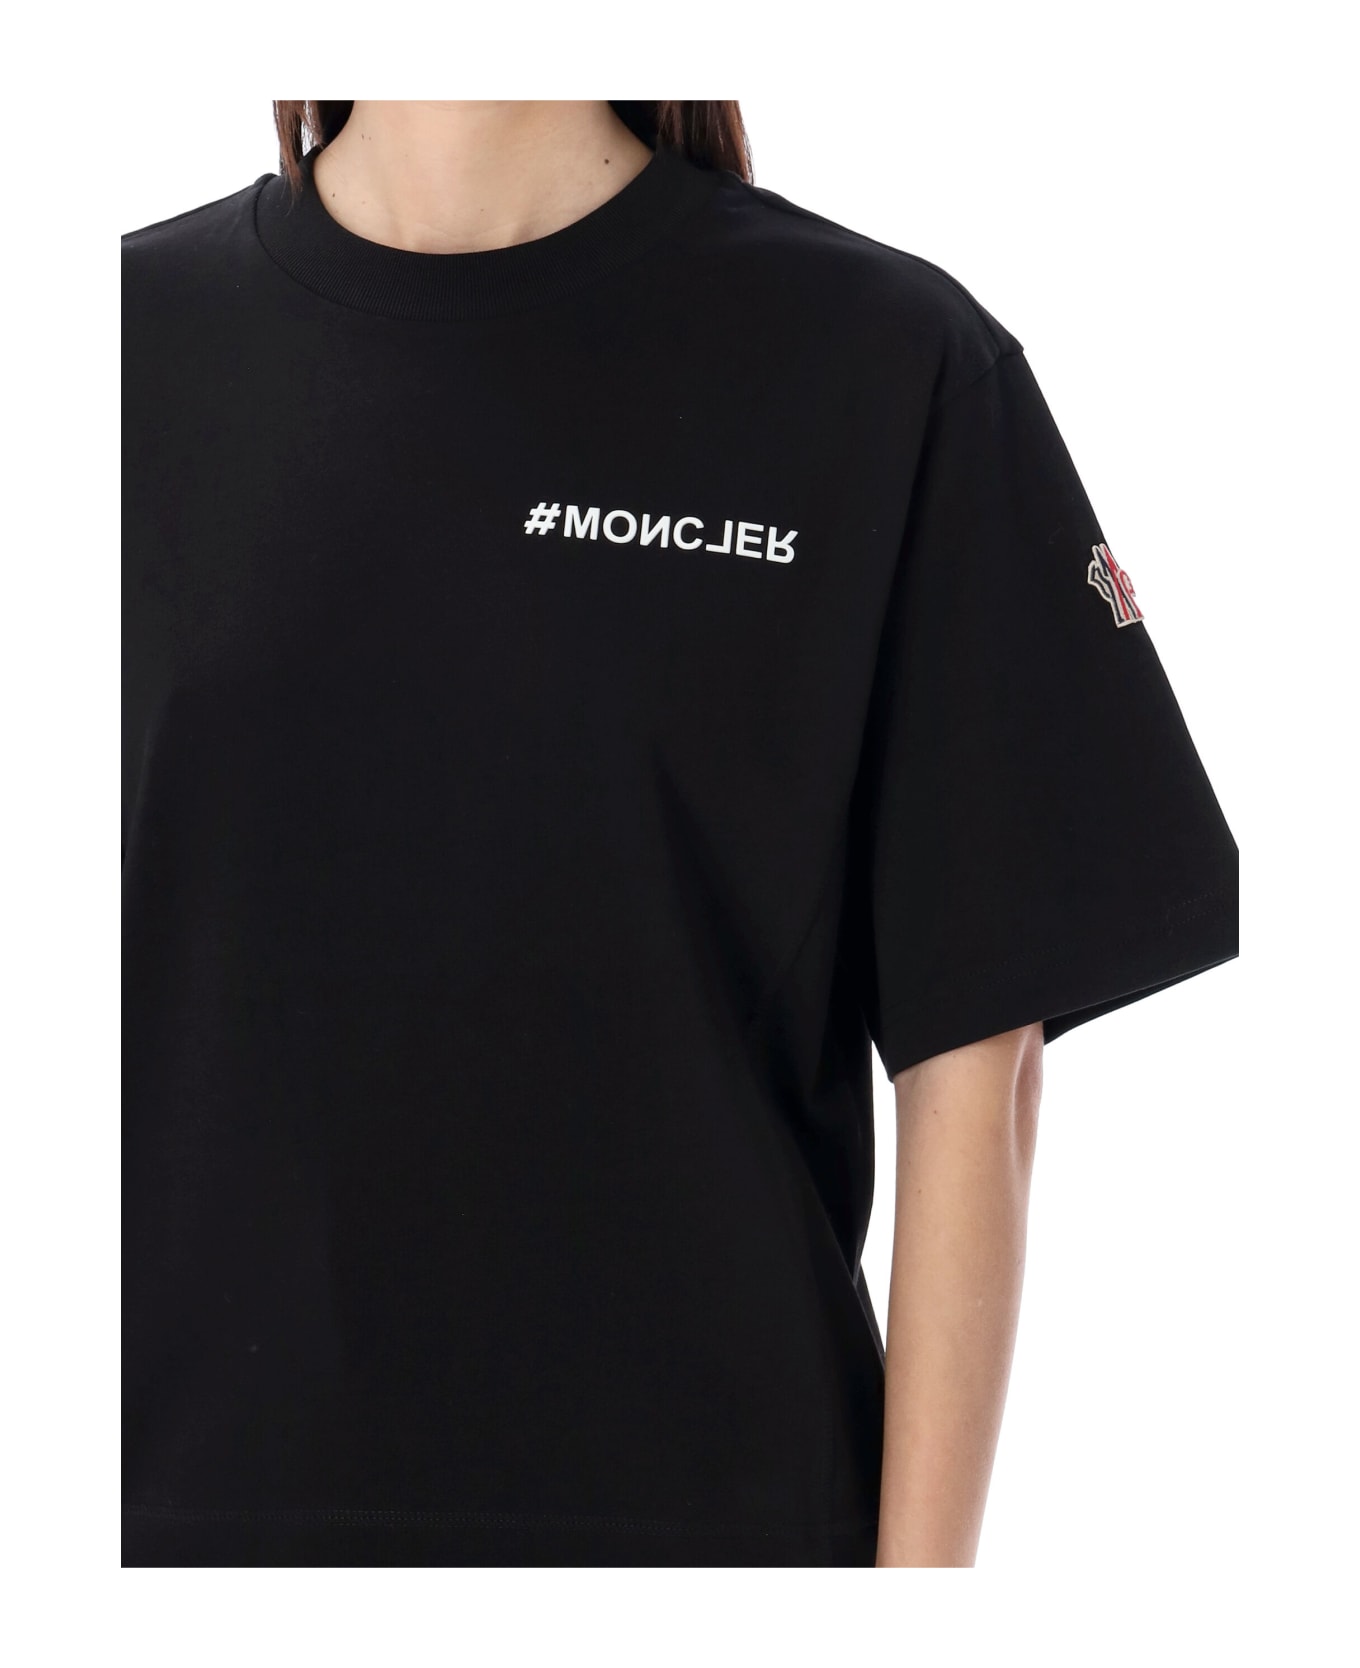 Moncler Grenoble T-shirt Tmm - BLACK Tシャツ